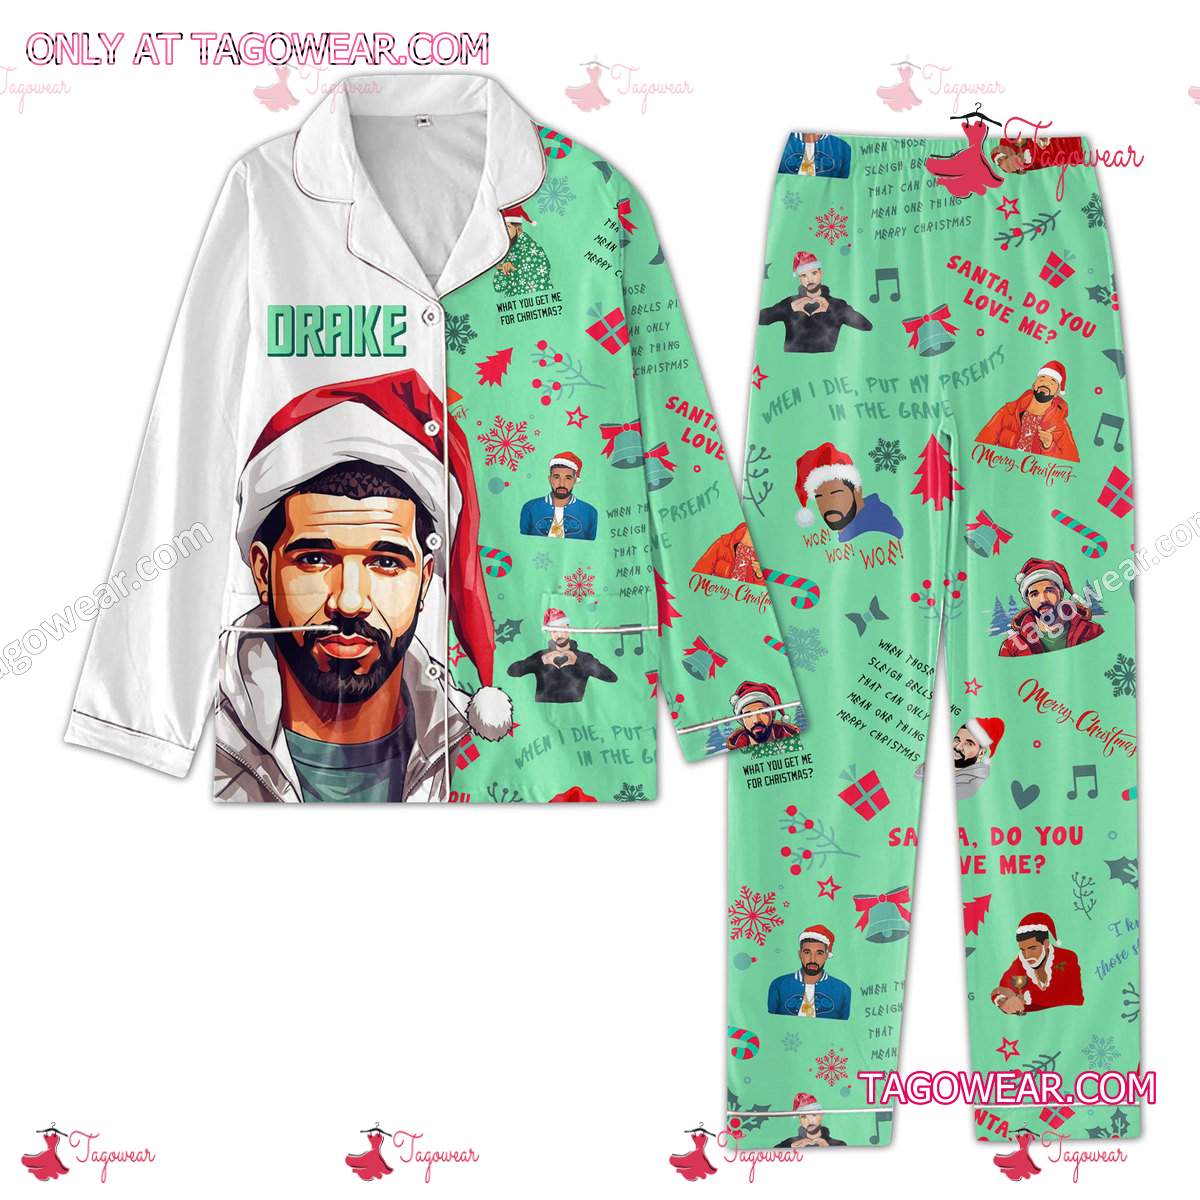 Drake What You Get Me For Christmas Pajamas For Women Set a